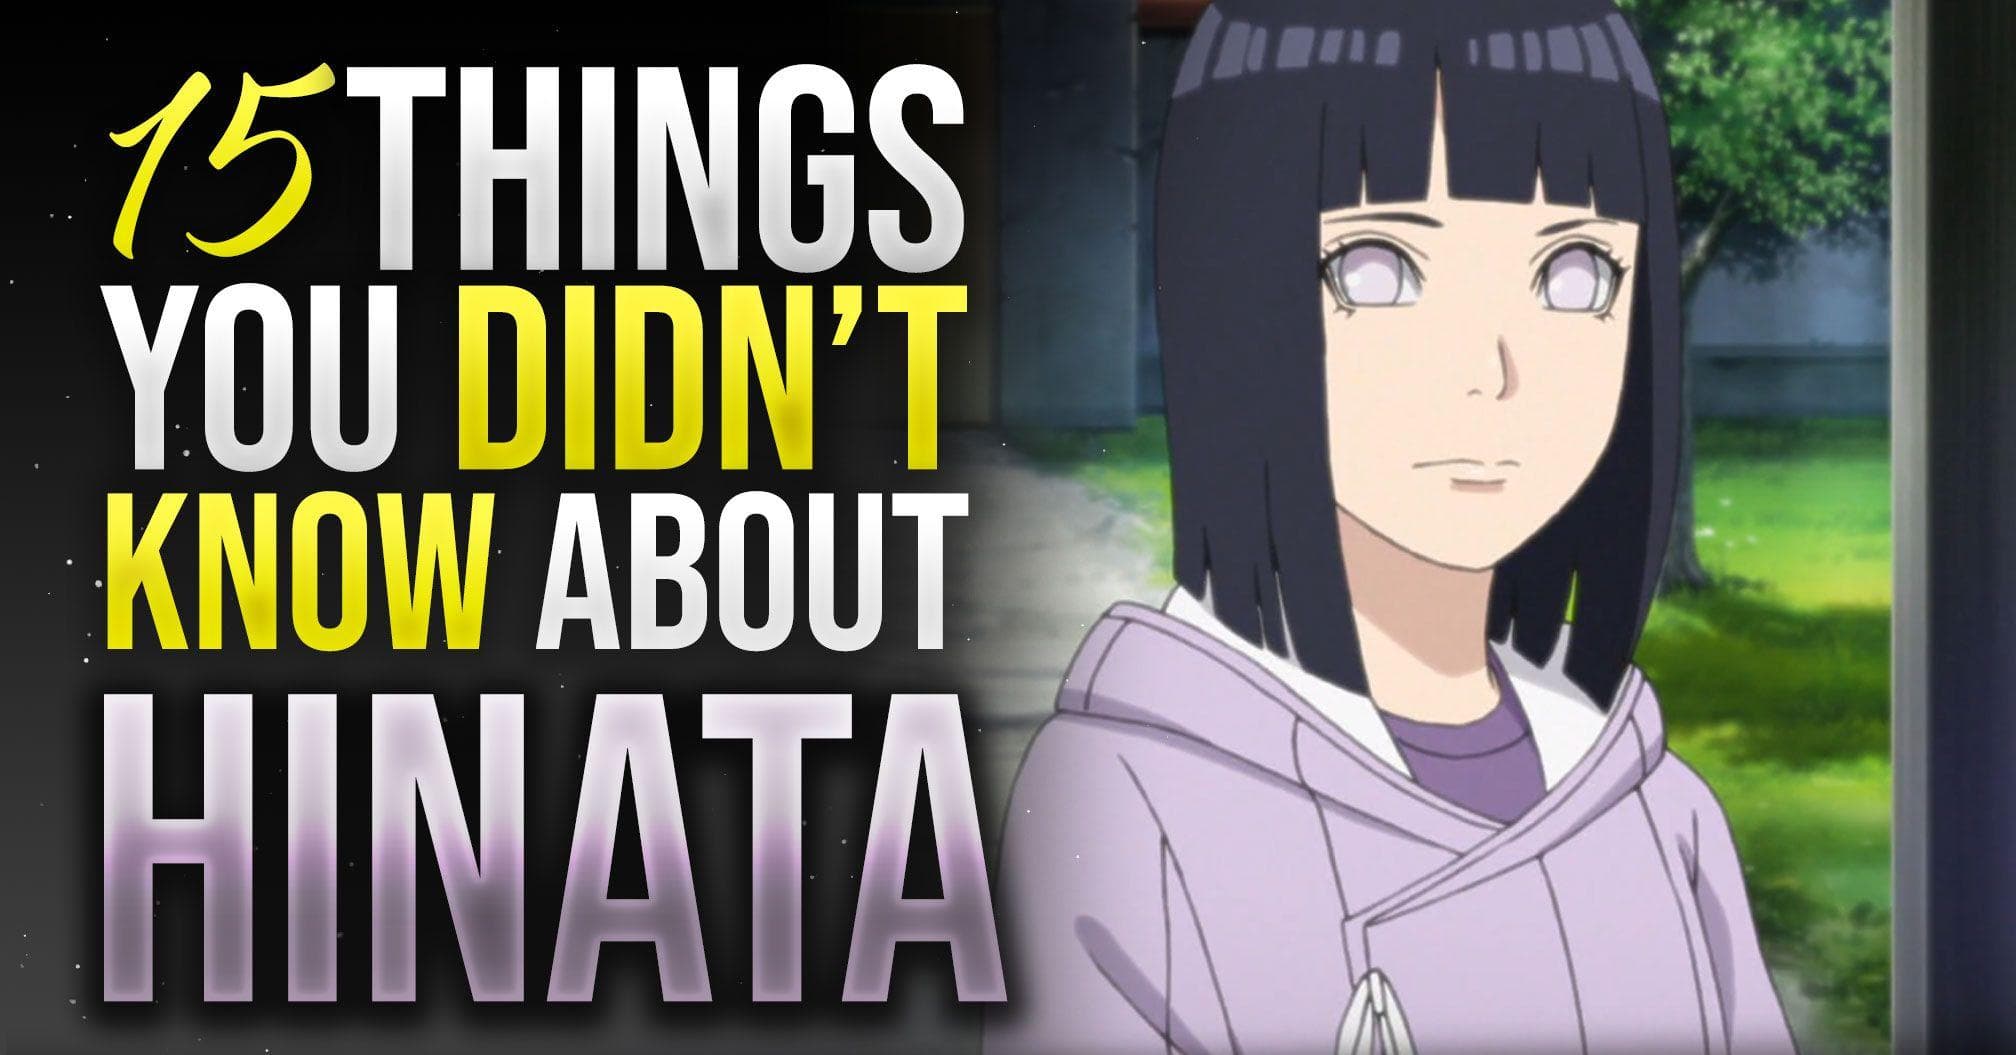 Top 10 Facts Of Naruto Uzumaki 